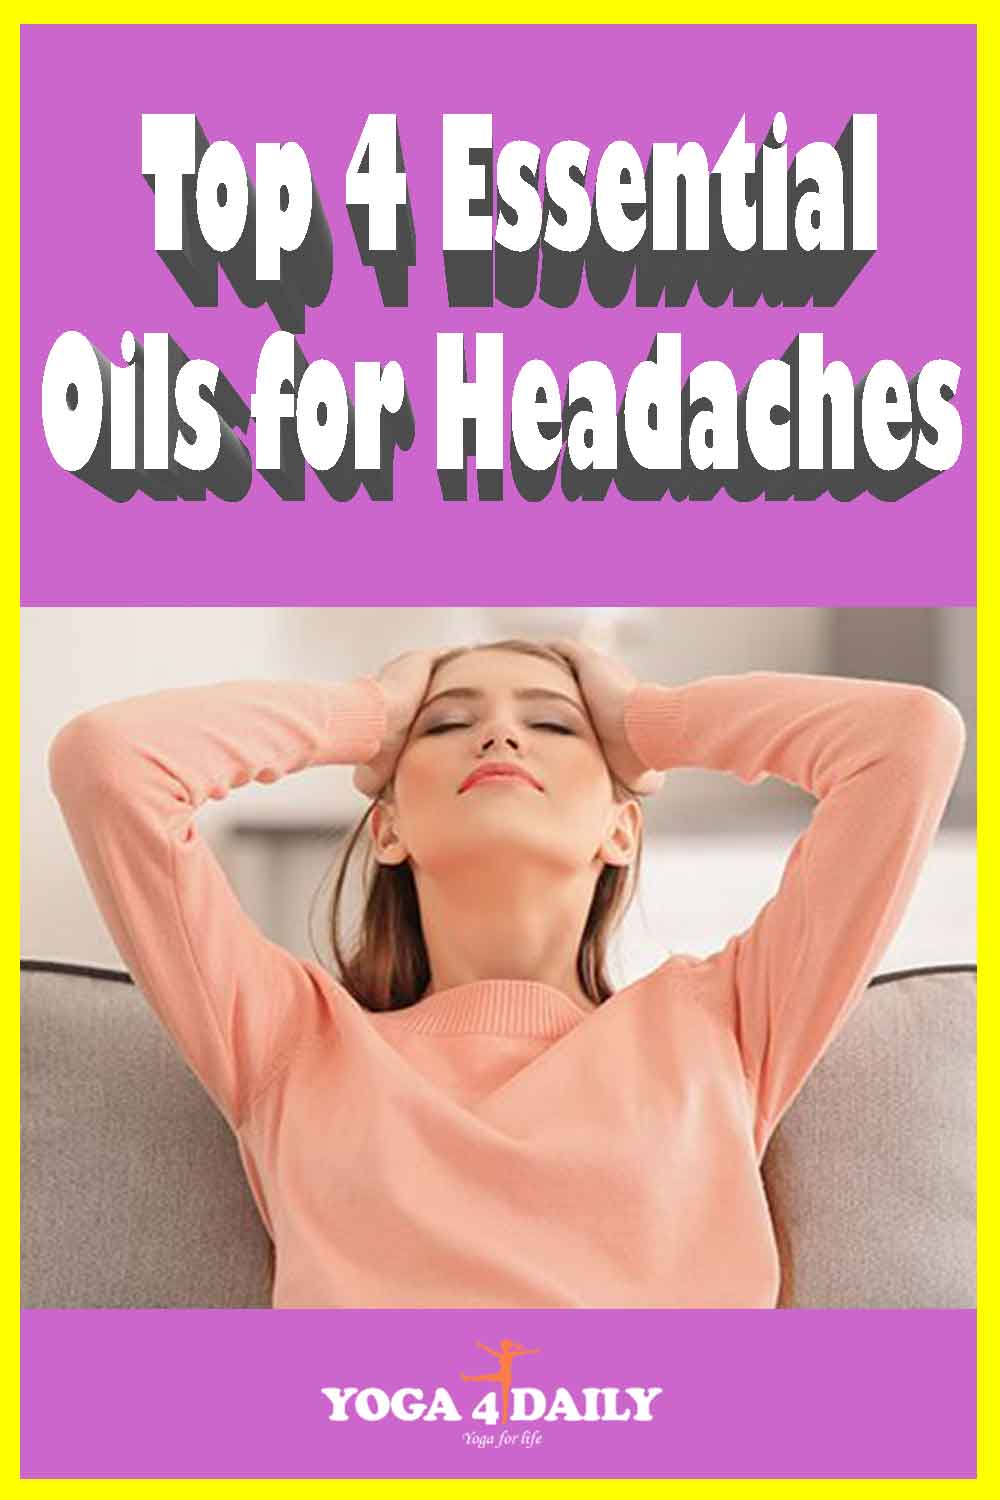 Top 4 Essential Oils for Headaches